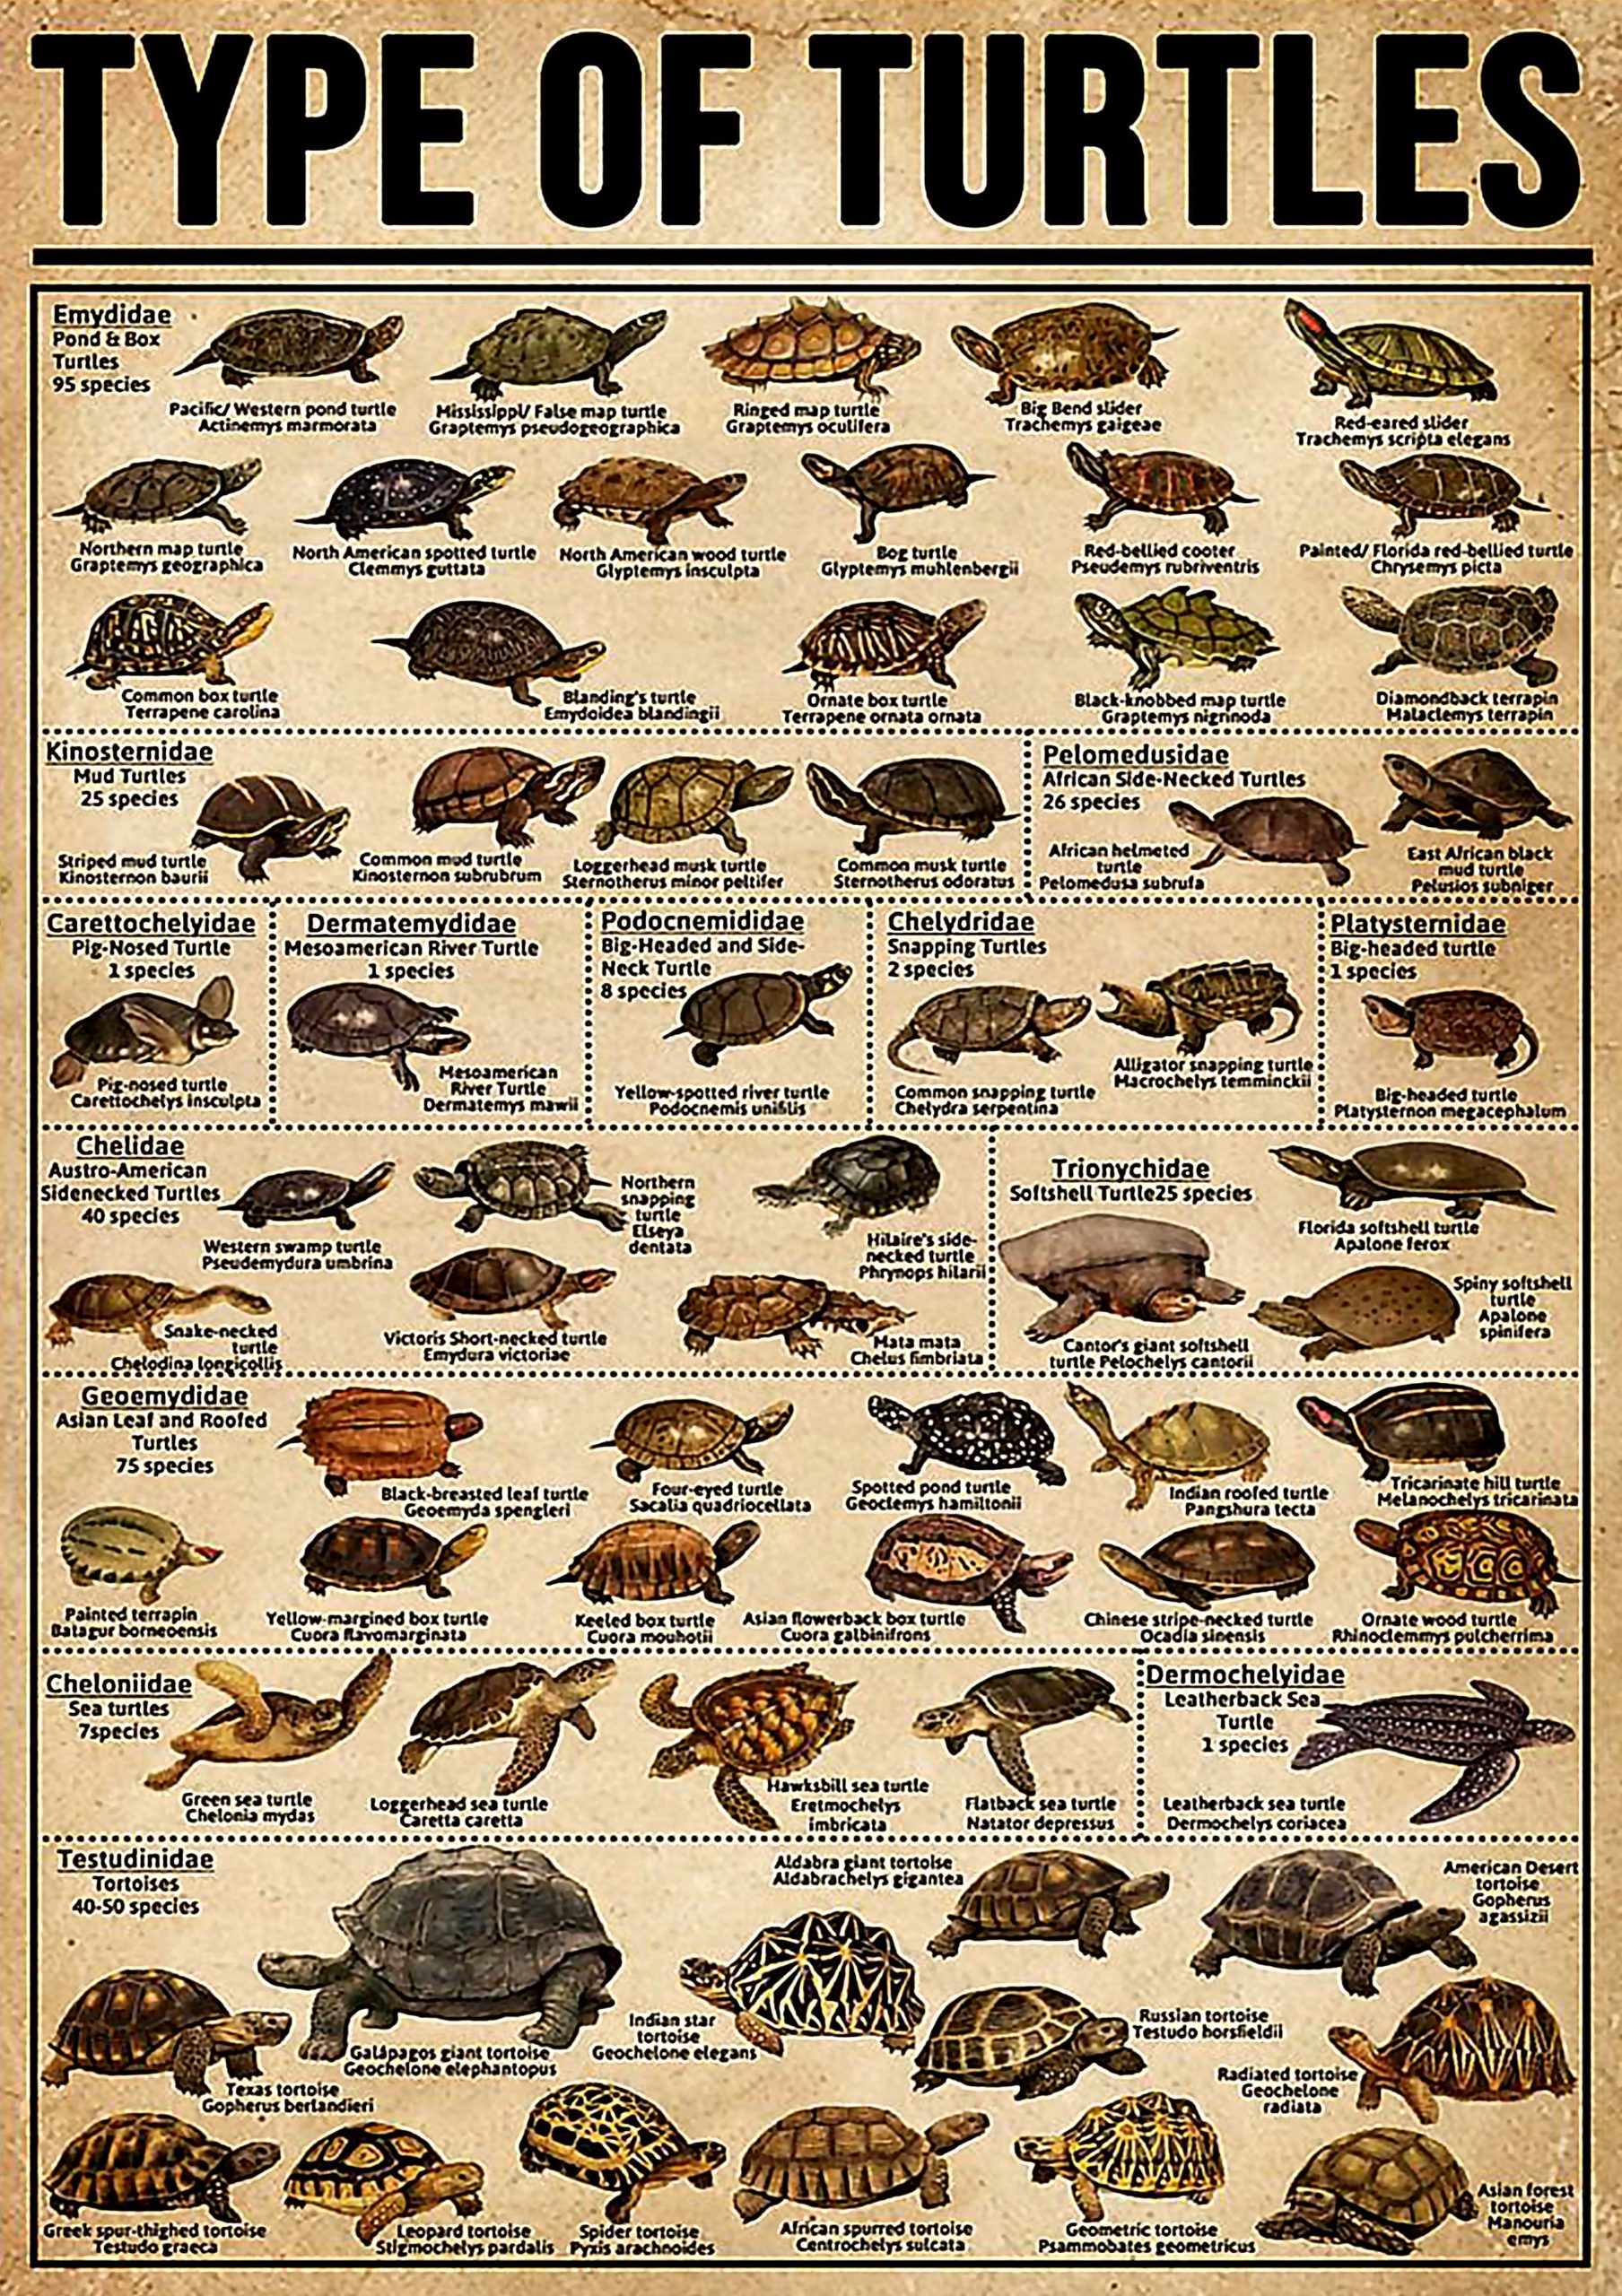 vintage type of turtles poster 1 - Copy